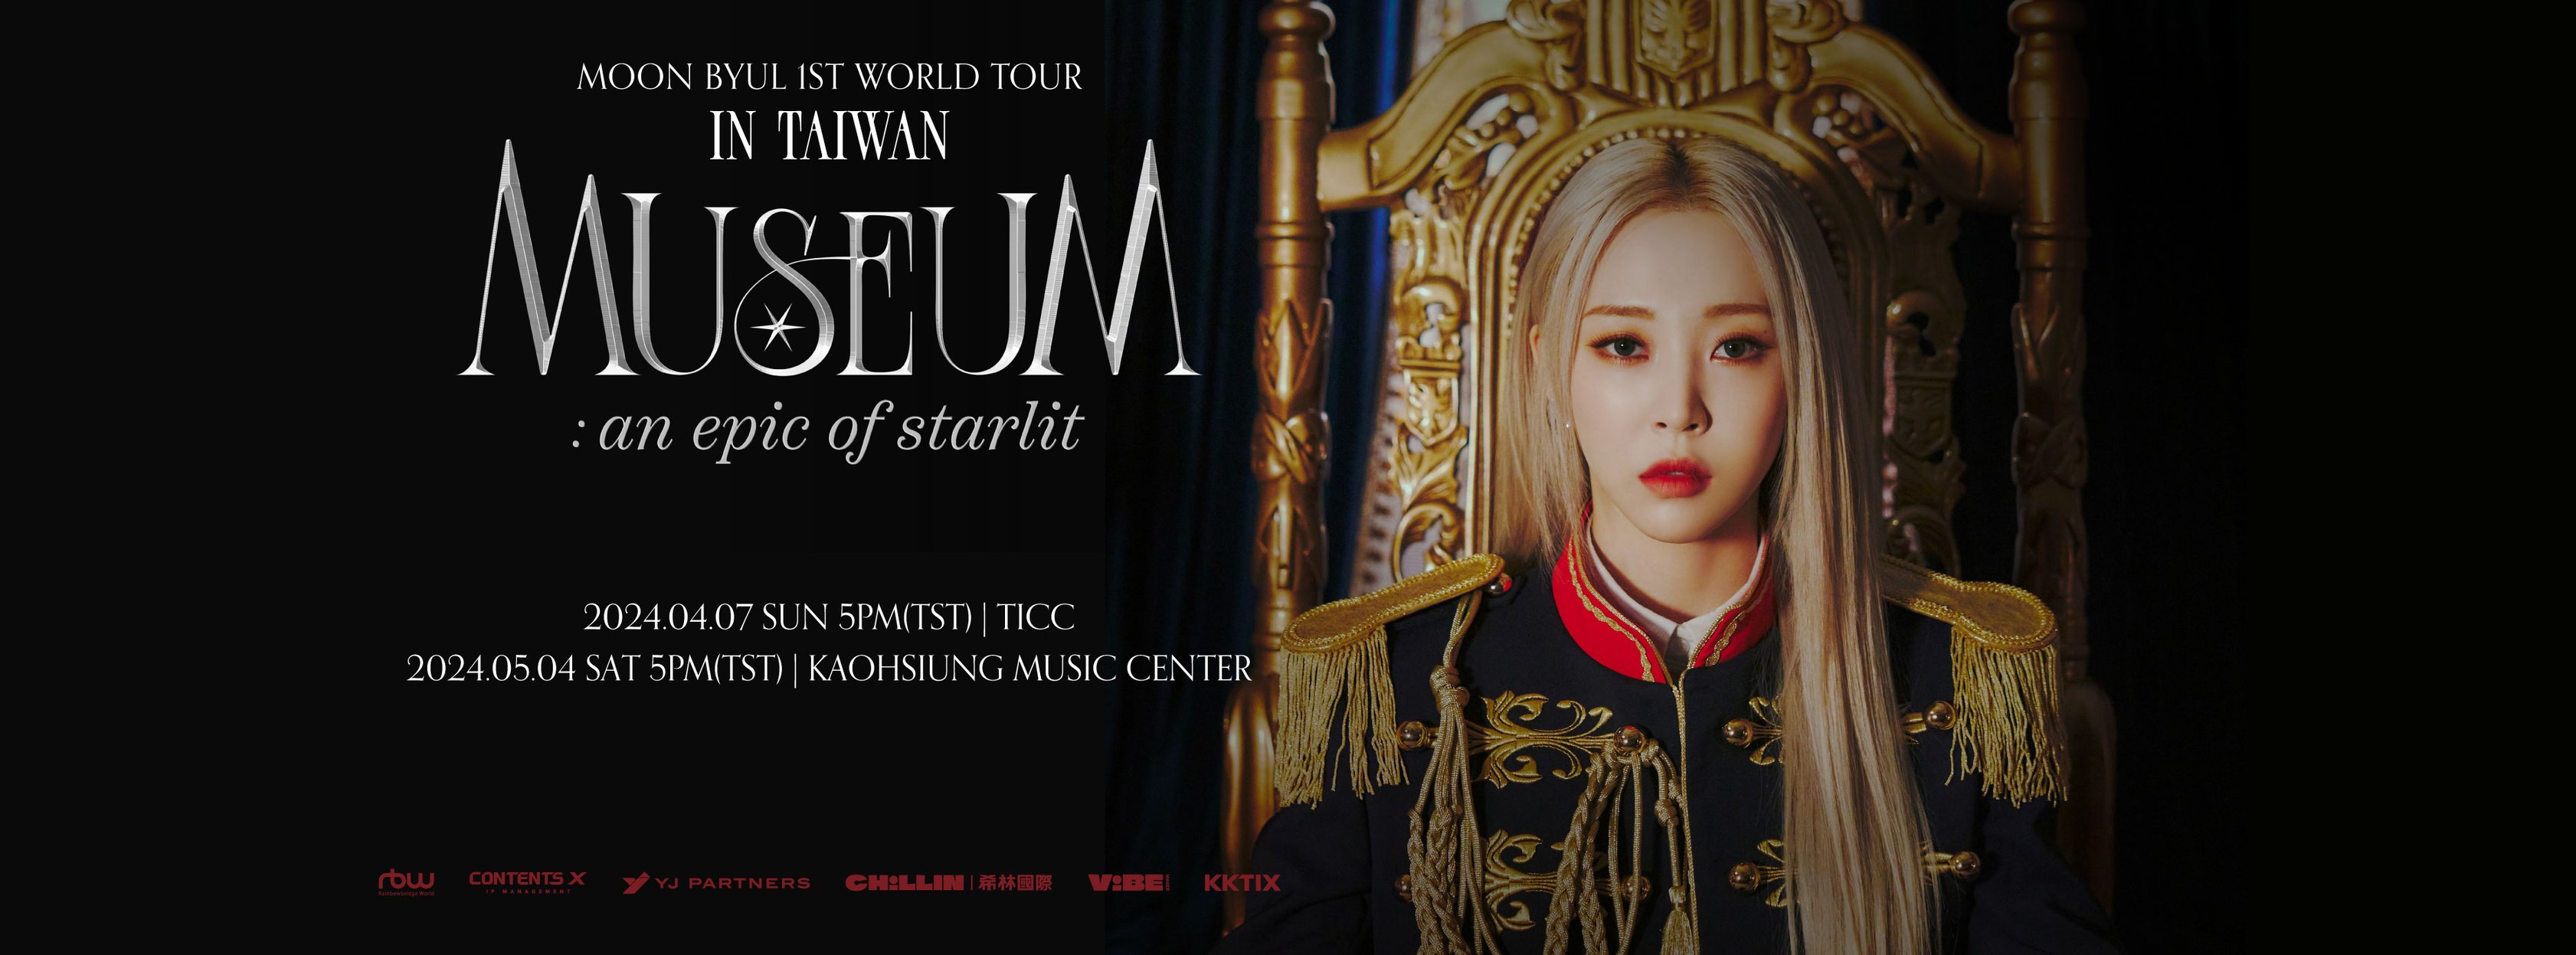 玟星演唱會2024高雄站｜Moon Byul 1ST WORLD TOUR [MUSEUM : an epic of starlit] IN KAOHSIUNG｜高雄流行音樂中心